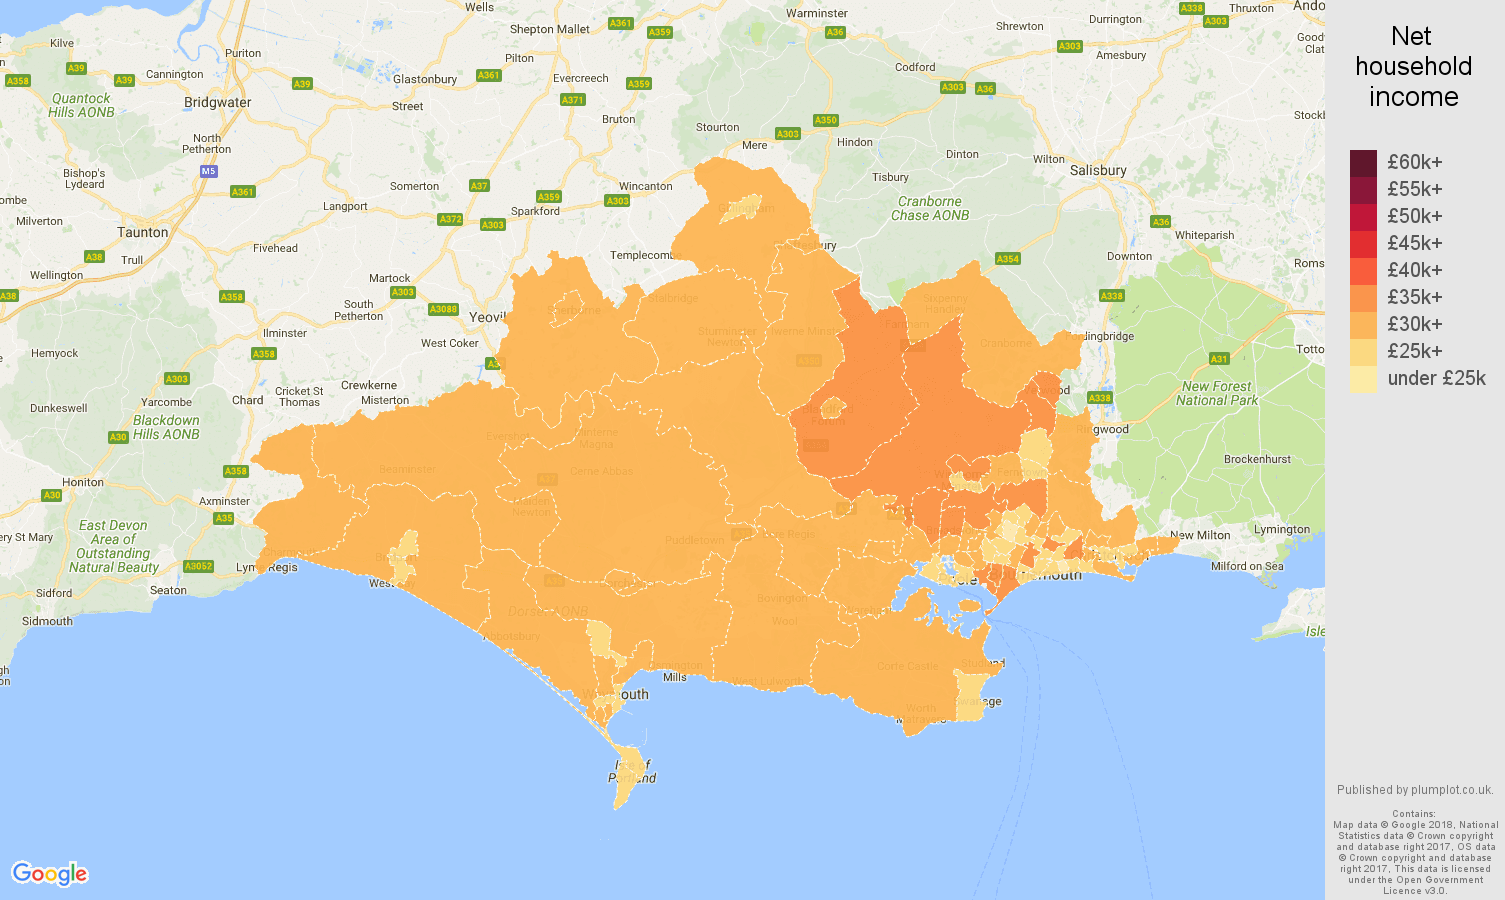 Dorset net household income map